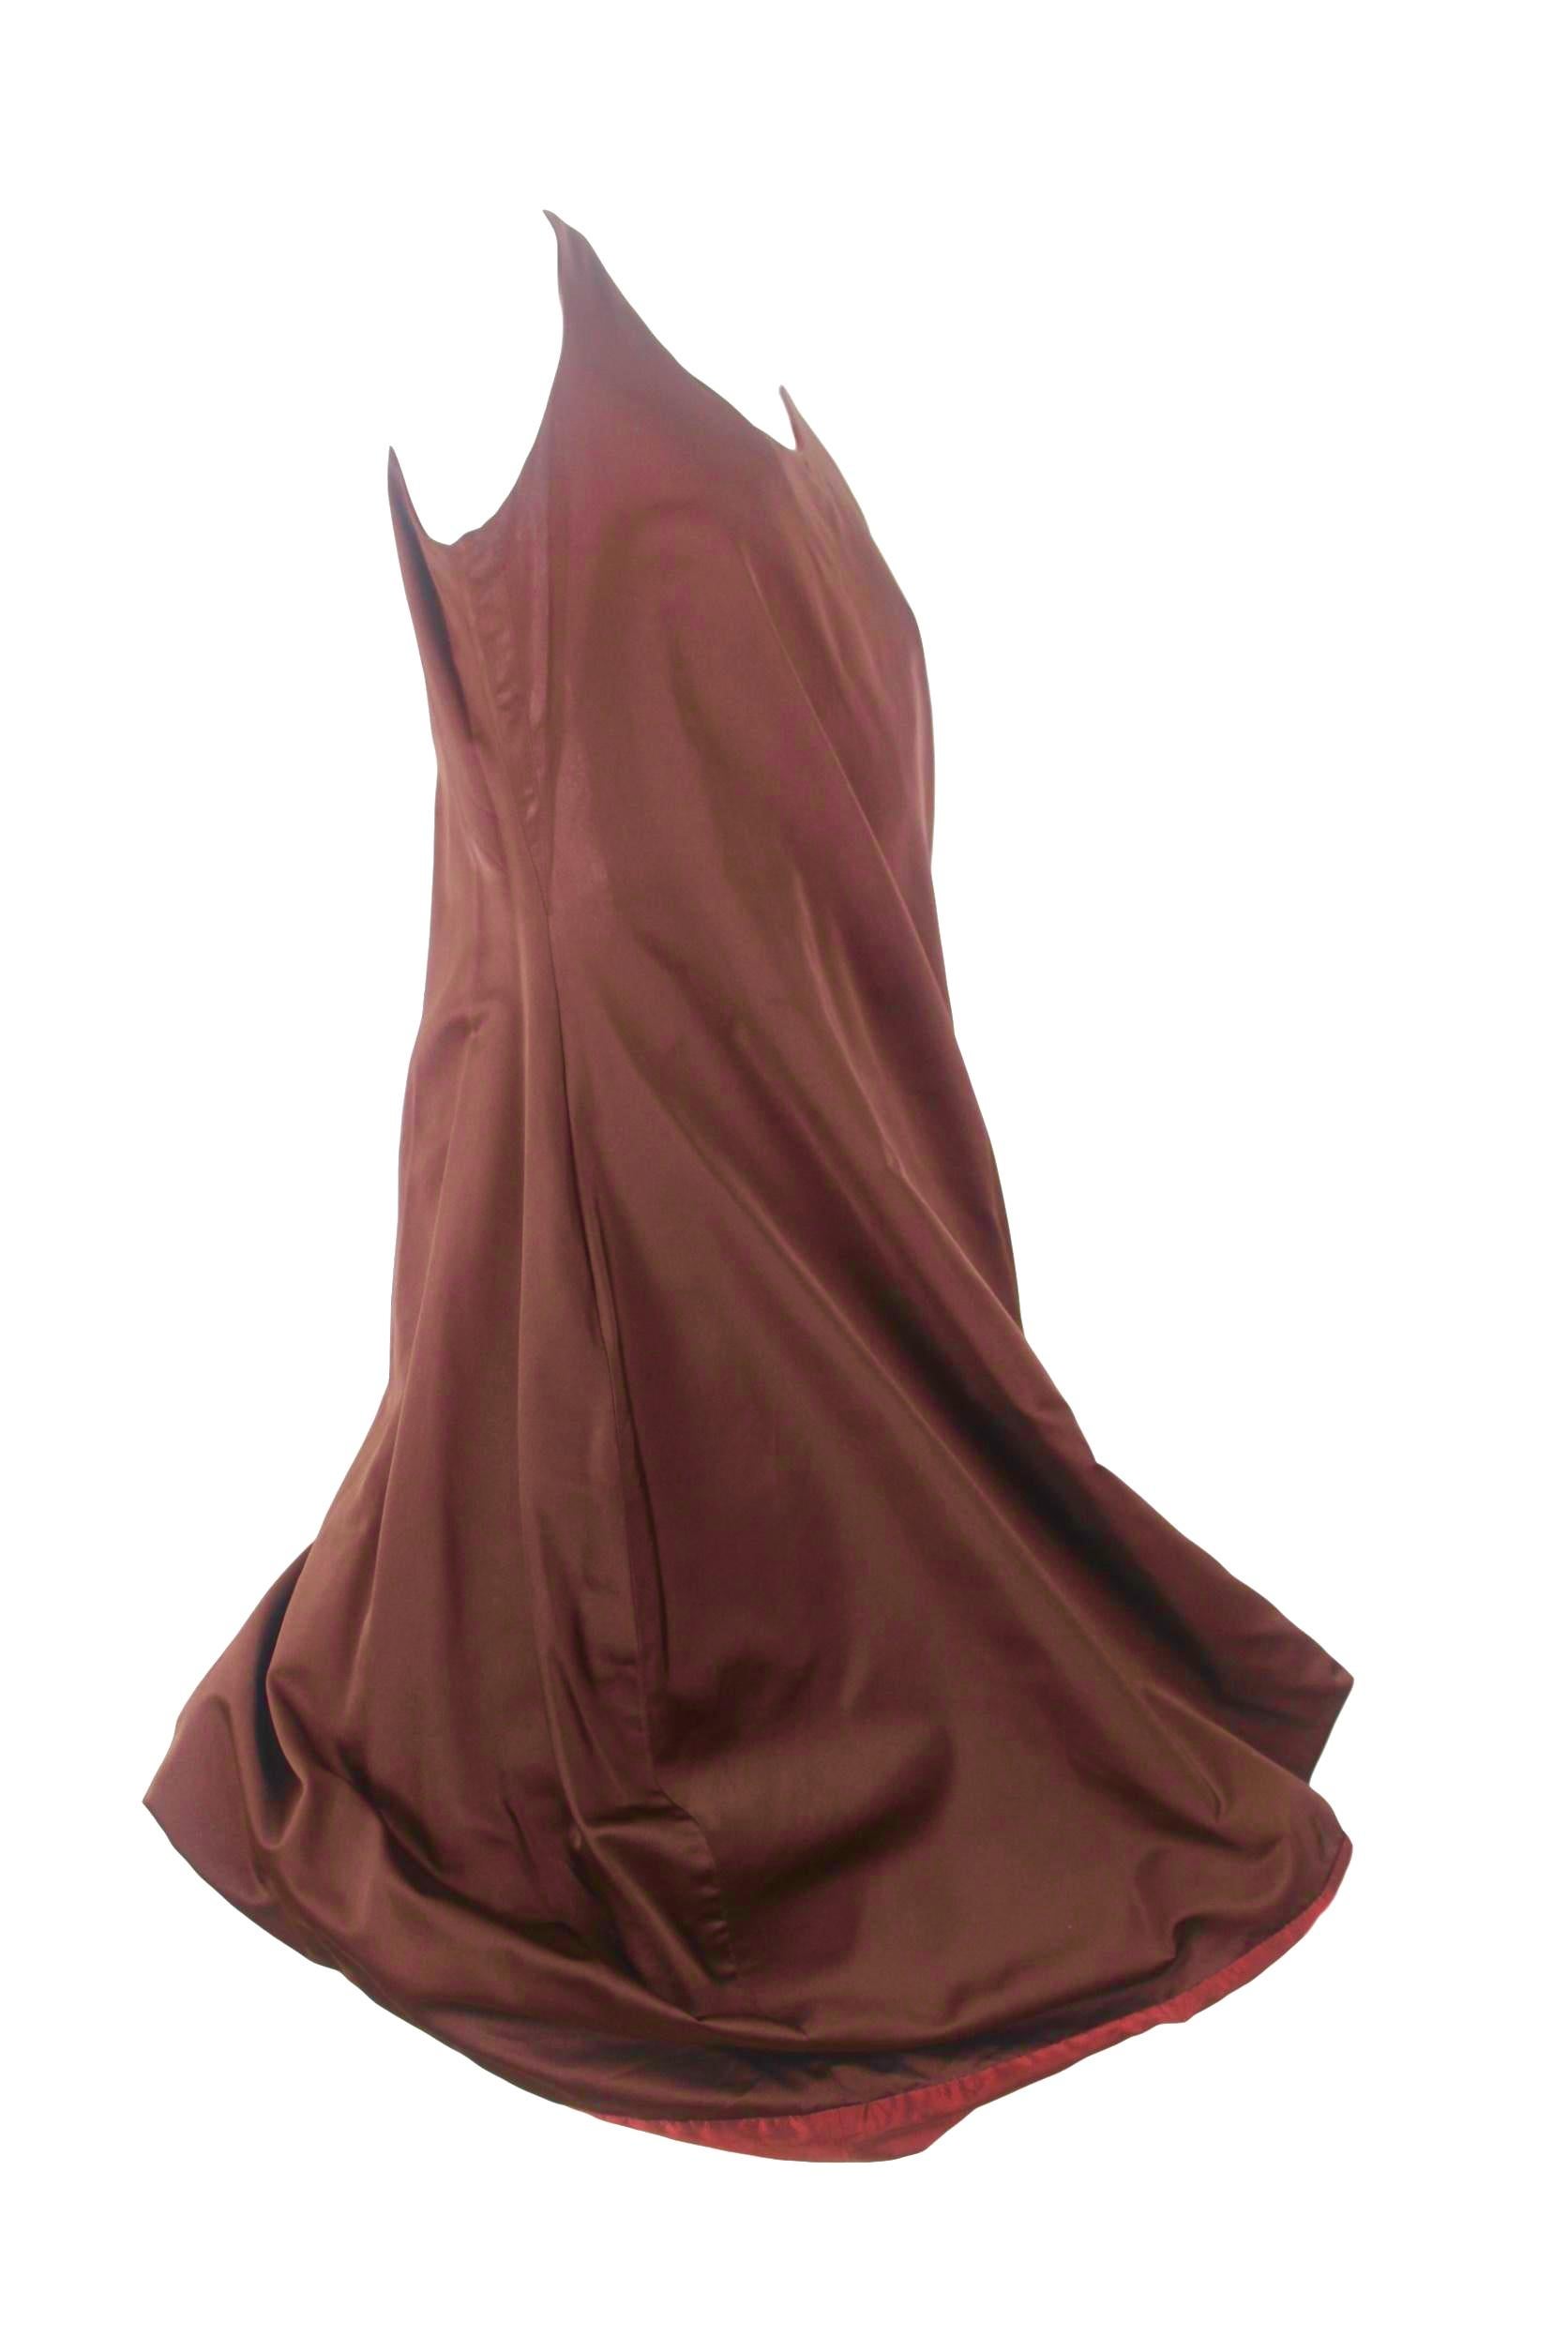 Jean Paul Gaultier Classique Label Bronze Satin Balloon Dress Spring/Summer 2003 For Sale 2